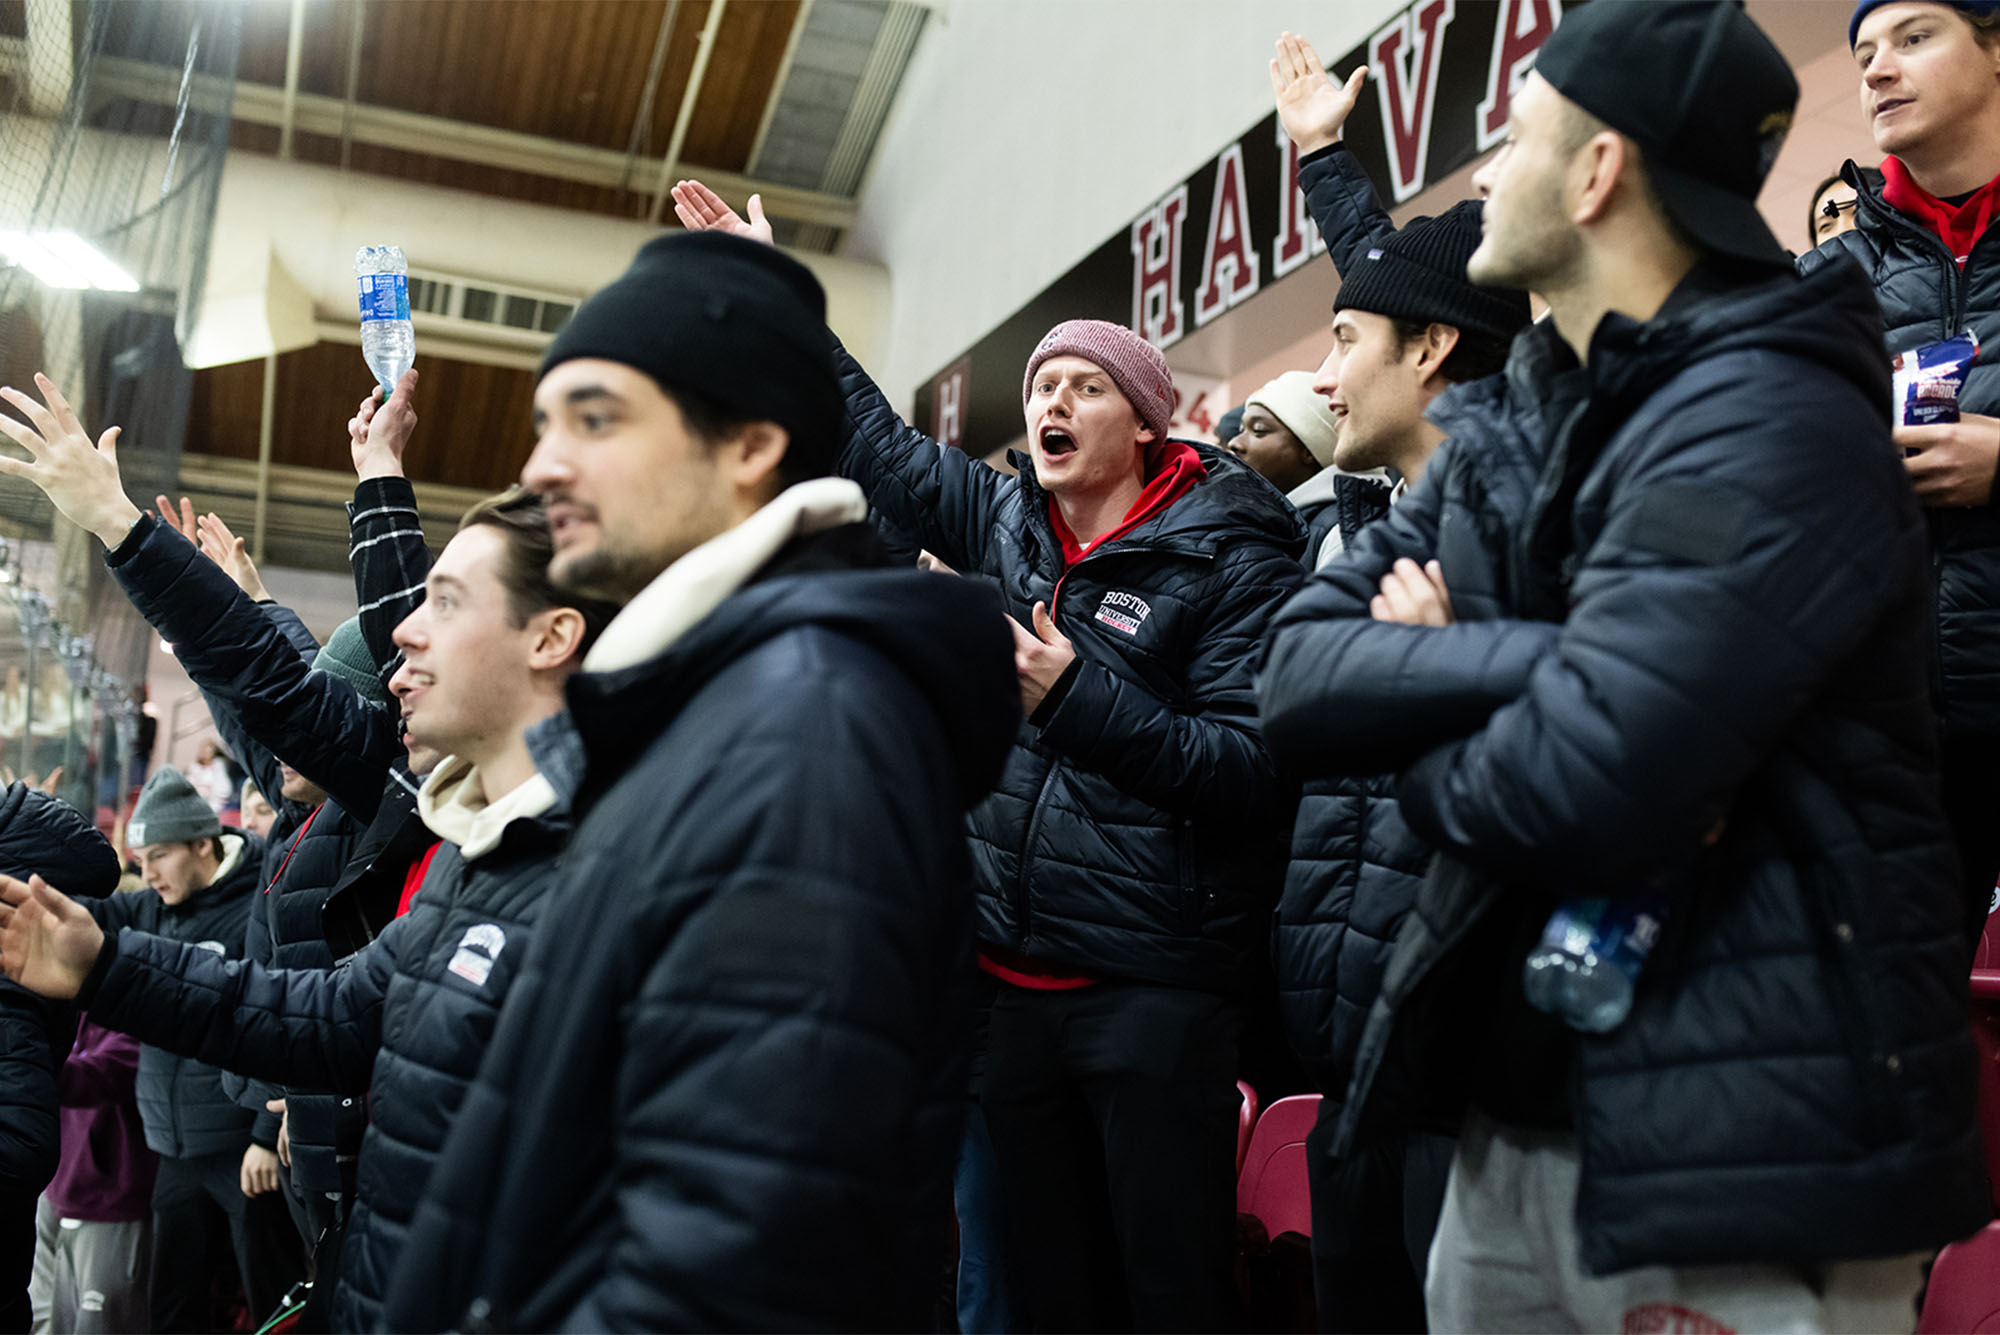 Photo: The BU Men's hockey team in matching black jackets cheer on the women's hockey team at the beanpot semifinal